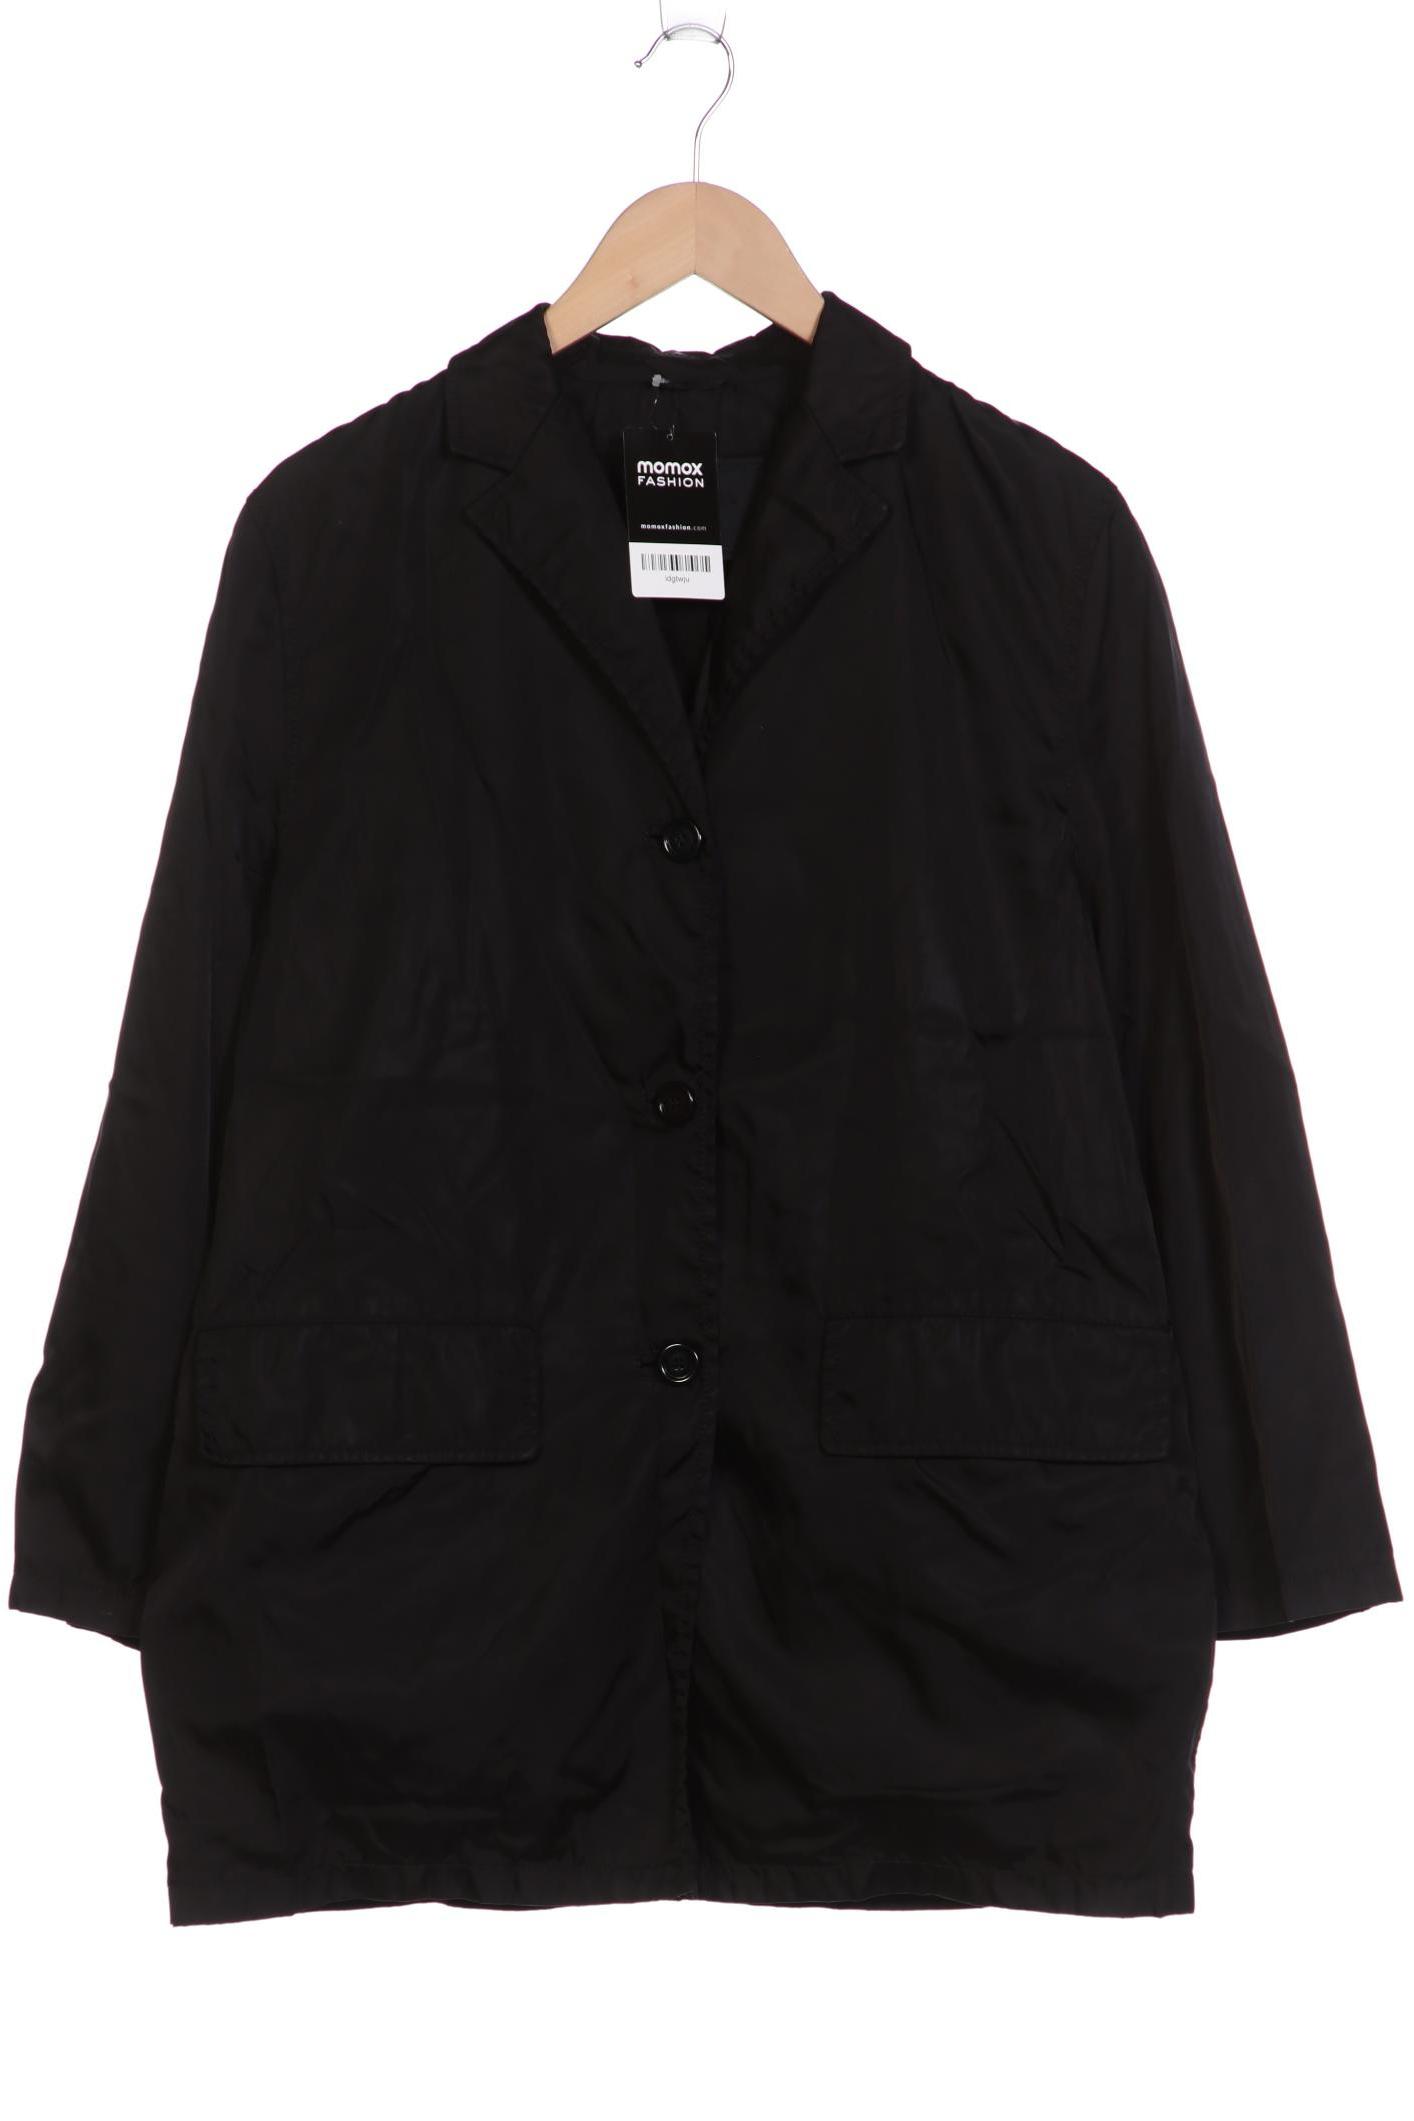 Prada Damen Jacke, schwarz, Gr. 42 von Prada